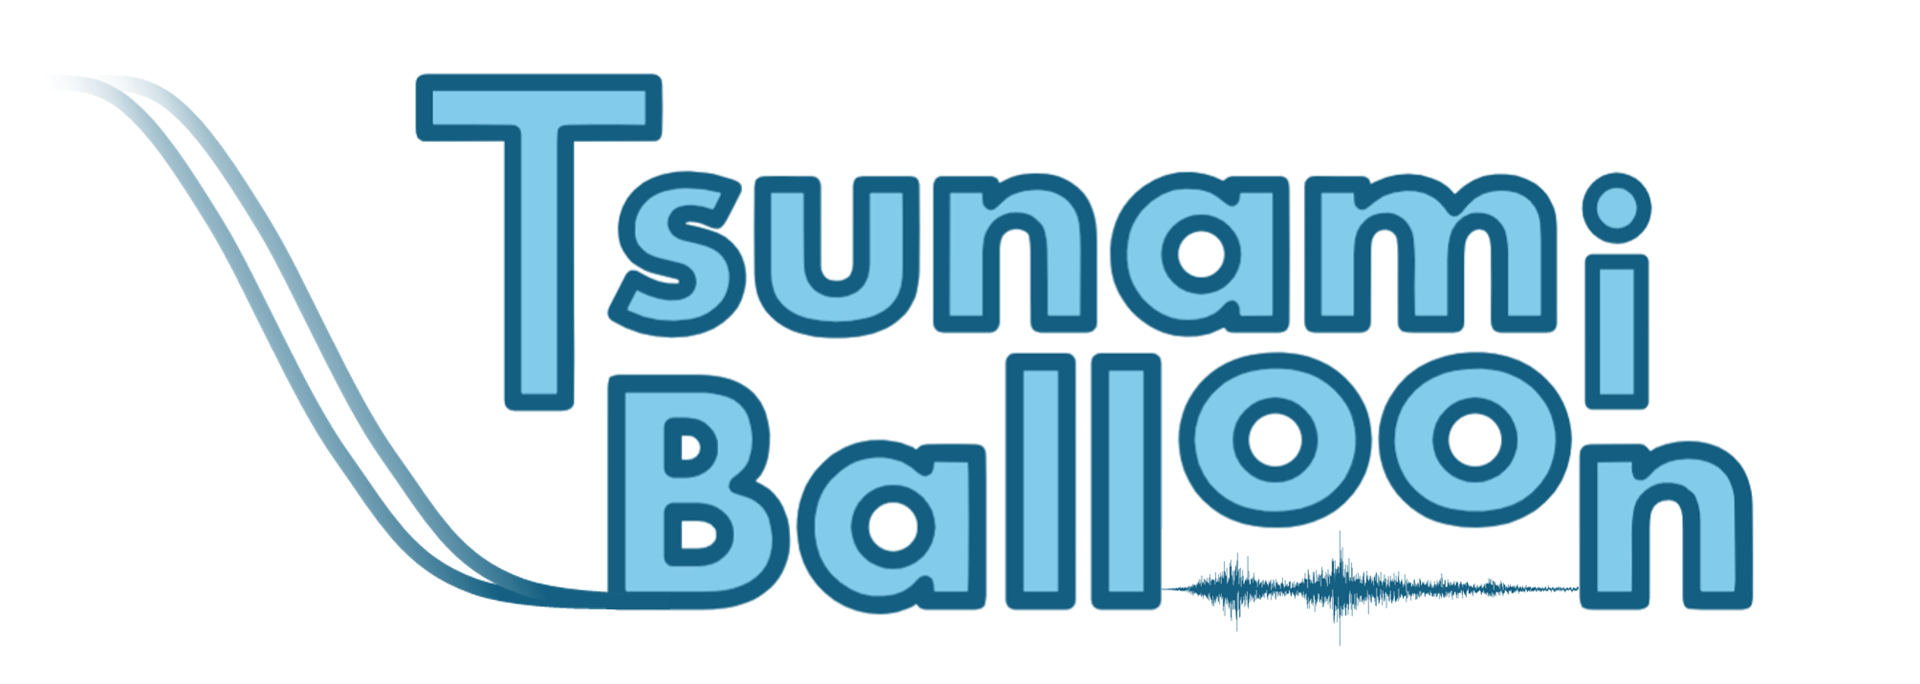 Tsunami Balloon